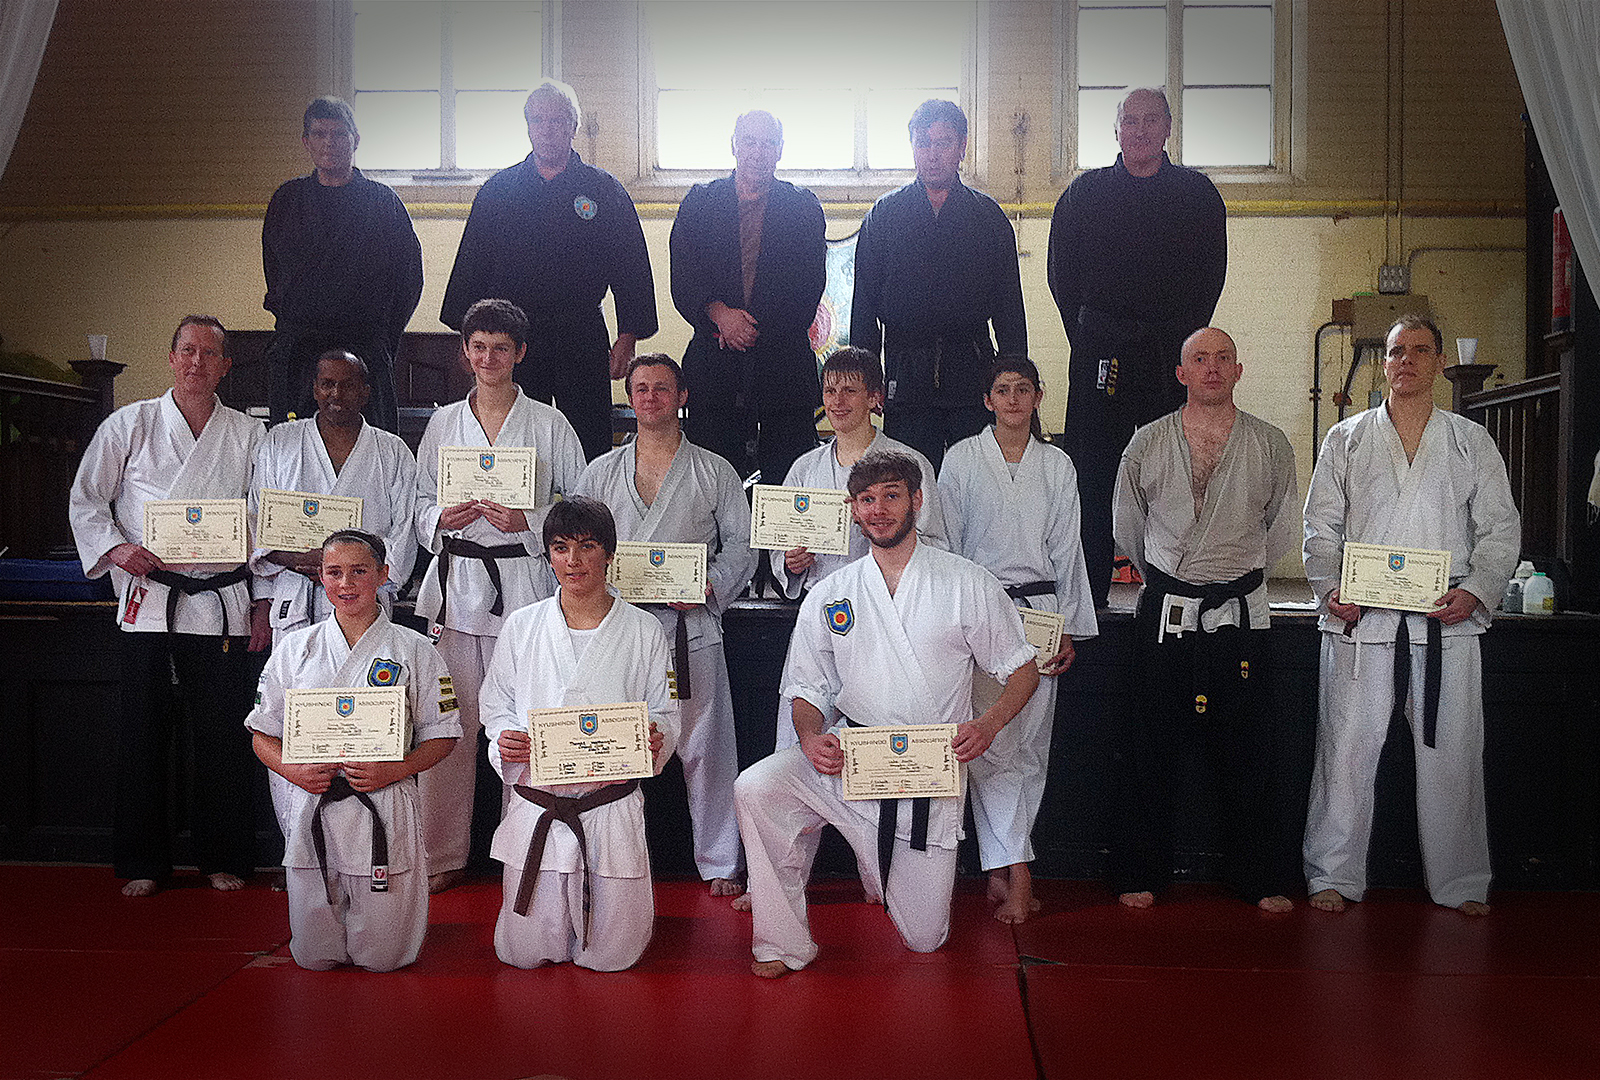 Karate association grading